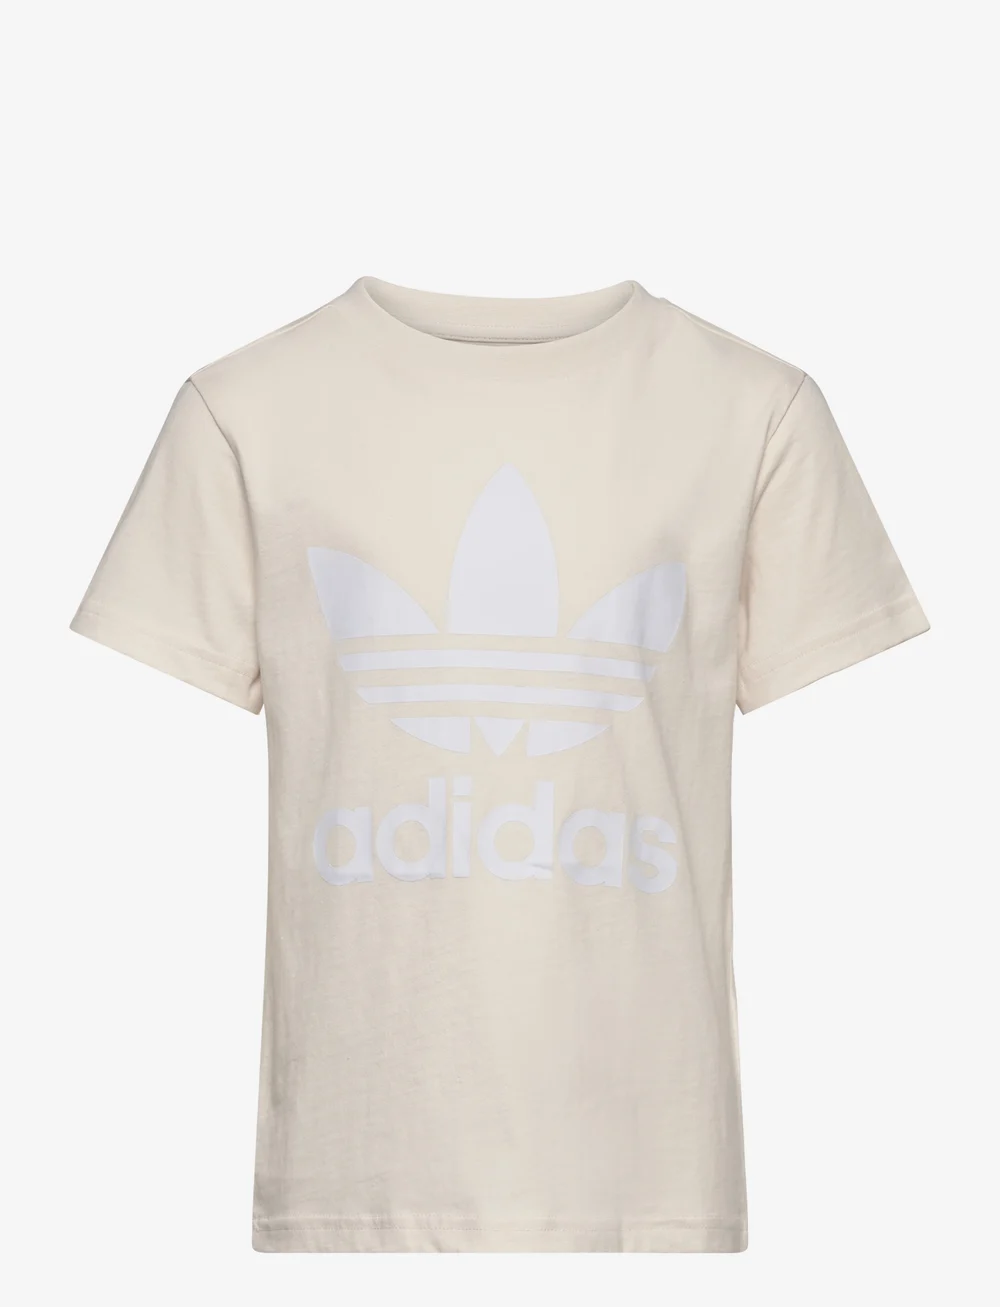 adidas Originals Trefoil Tee - T-Shirts